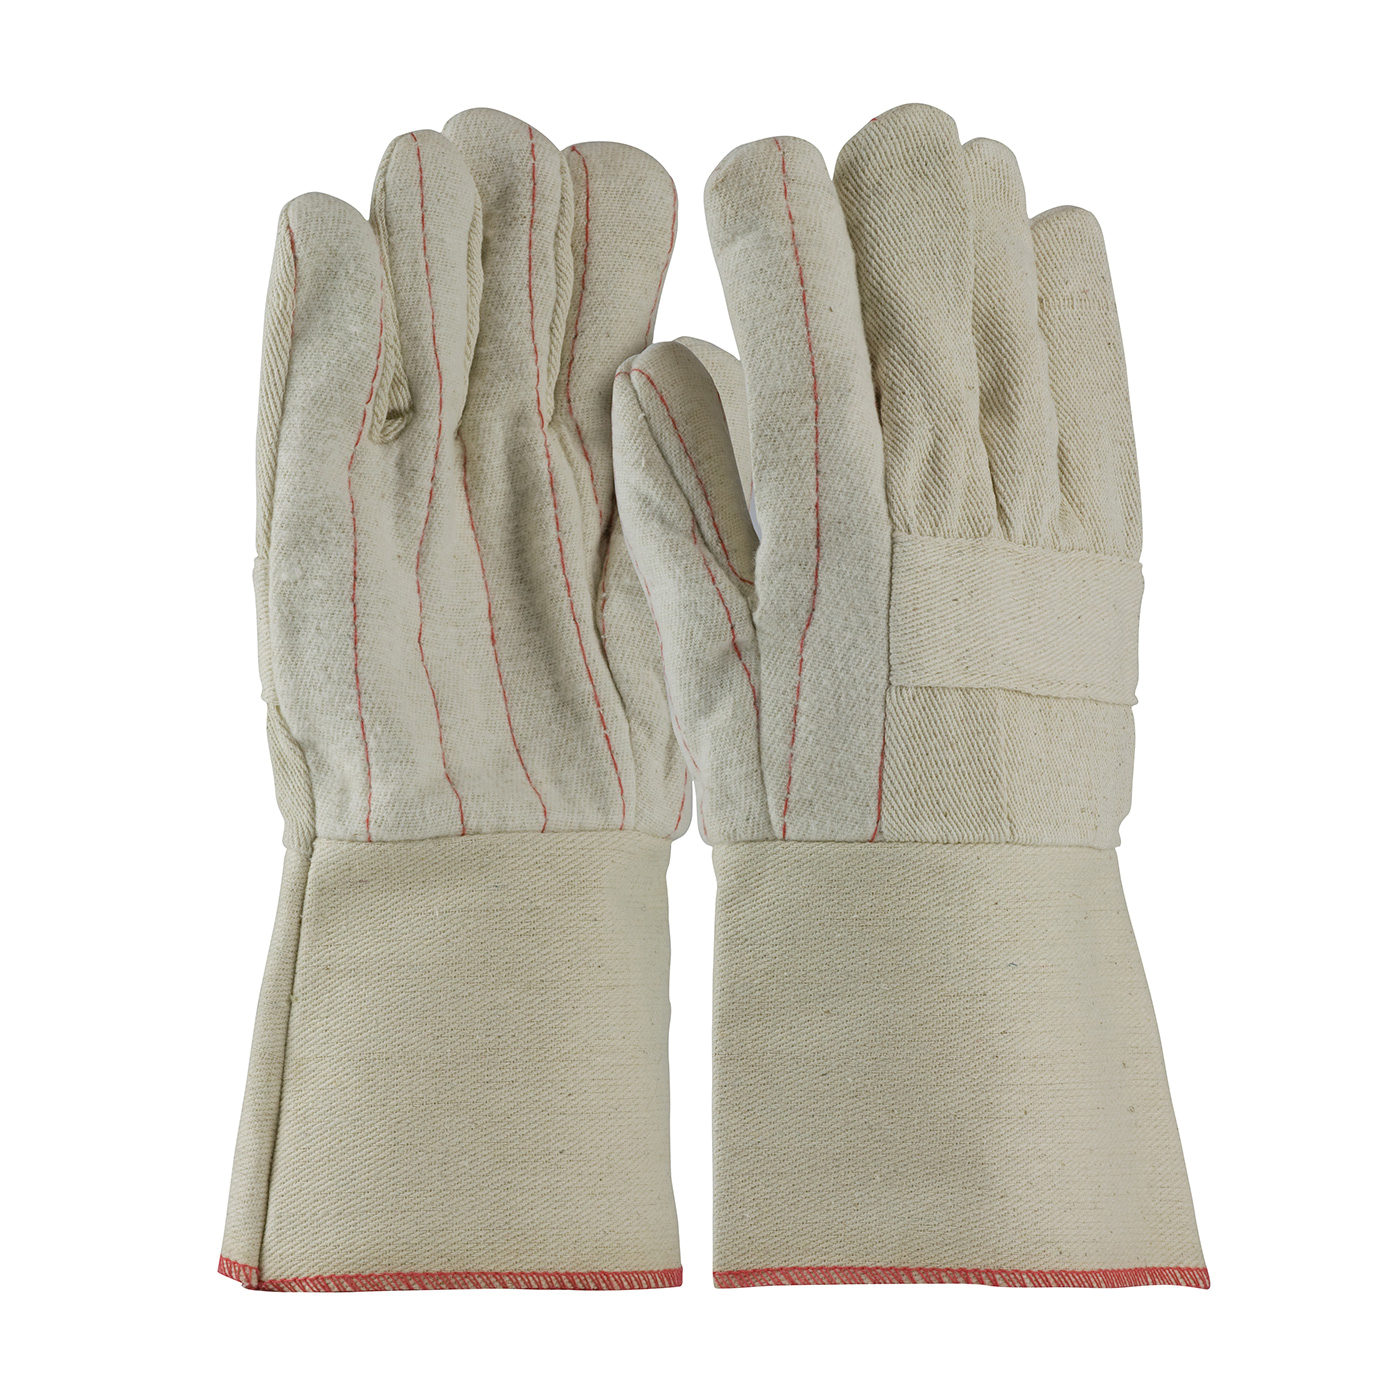 PIP® 94-928G Men's Premium Grade Hot Mill Gloves, L, Cotton/Canvas, Natural, Burlap/Cotton, Gauntlet Cuff, 12.4 in L